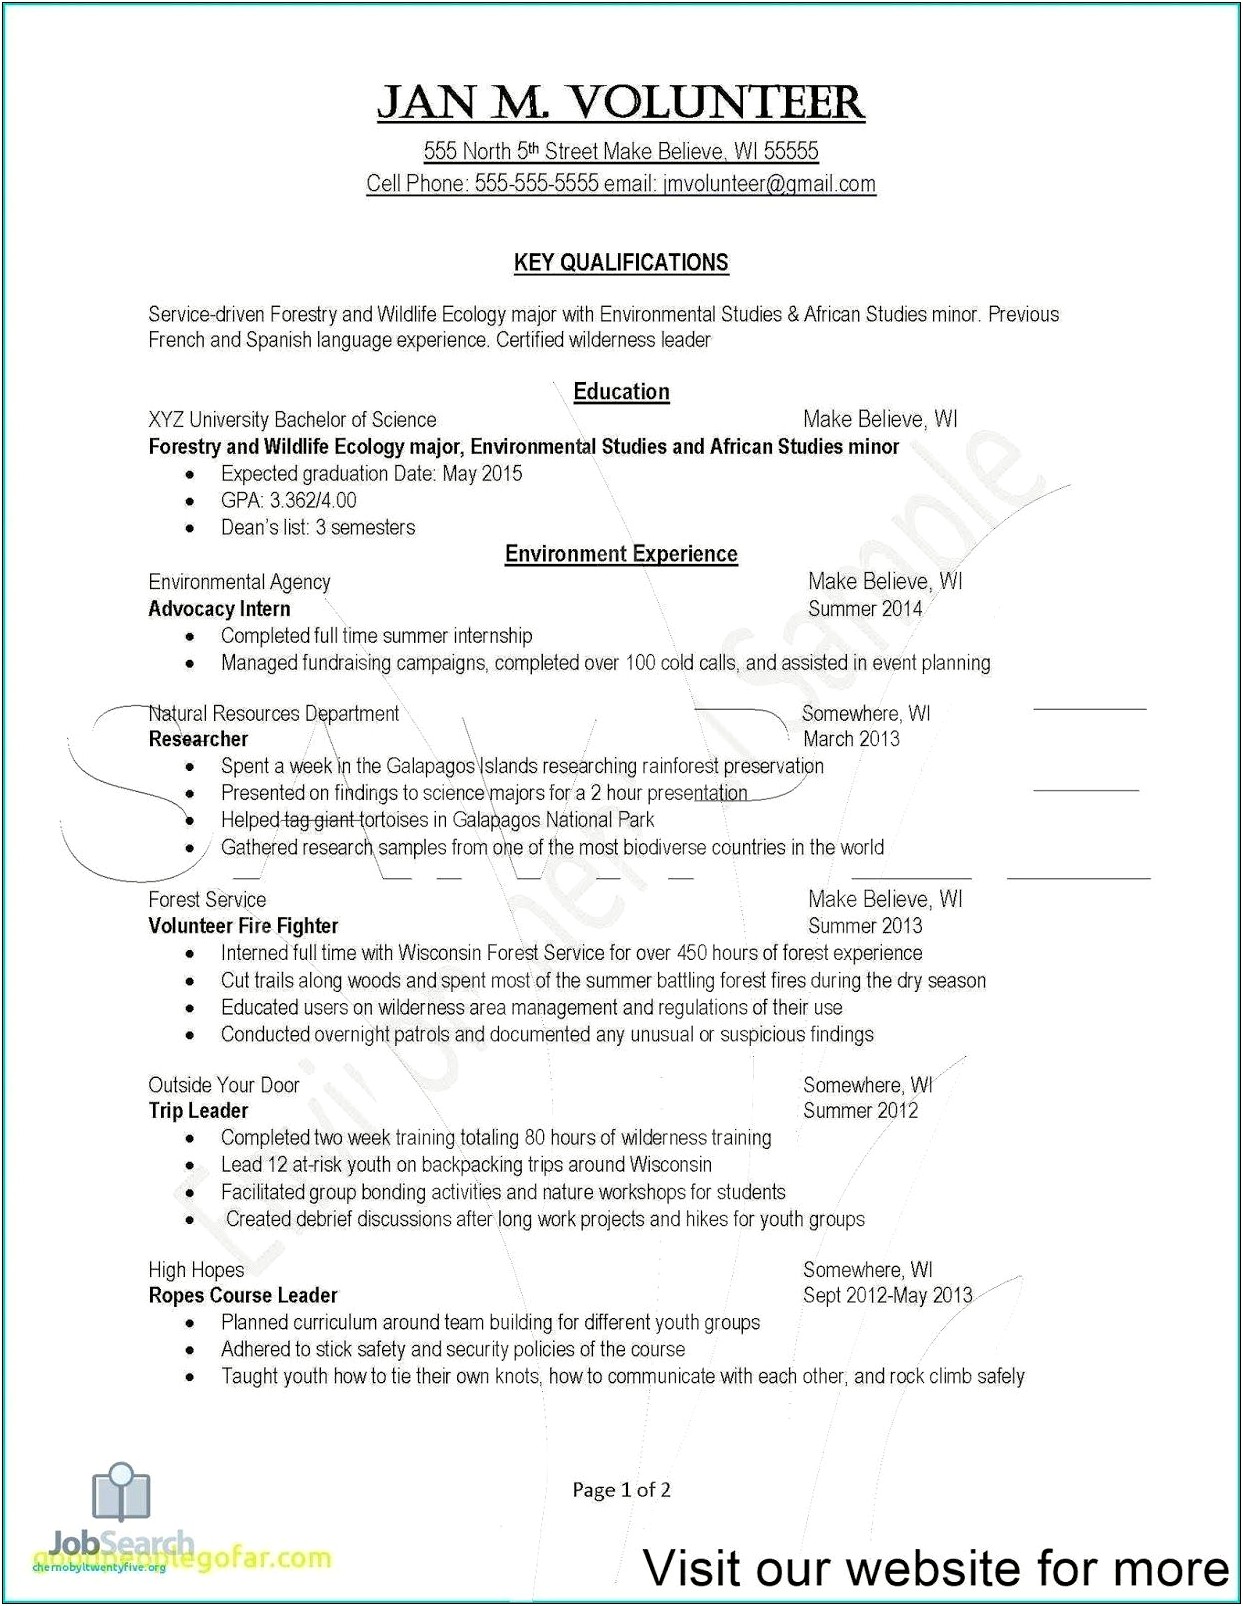 Created Work Schedules Wording On Resume